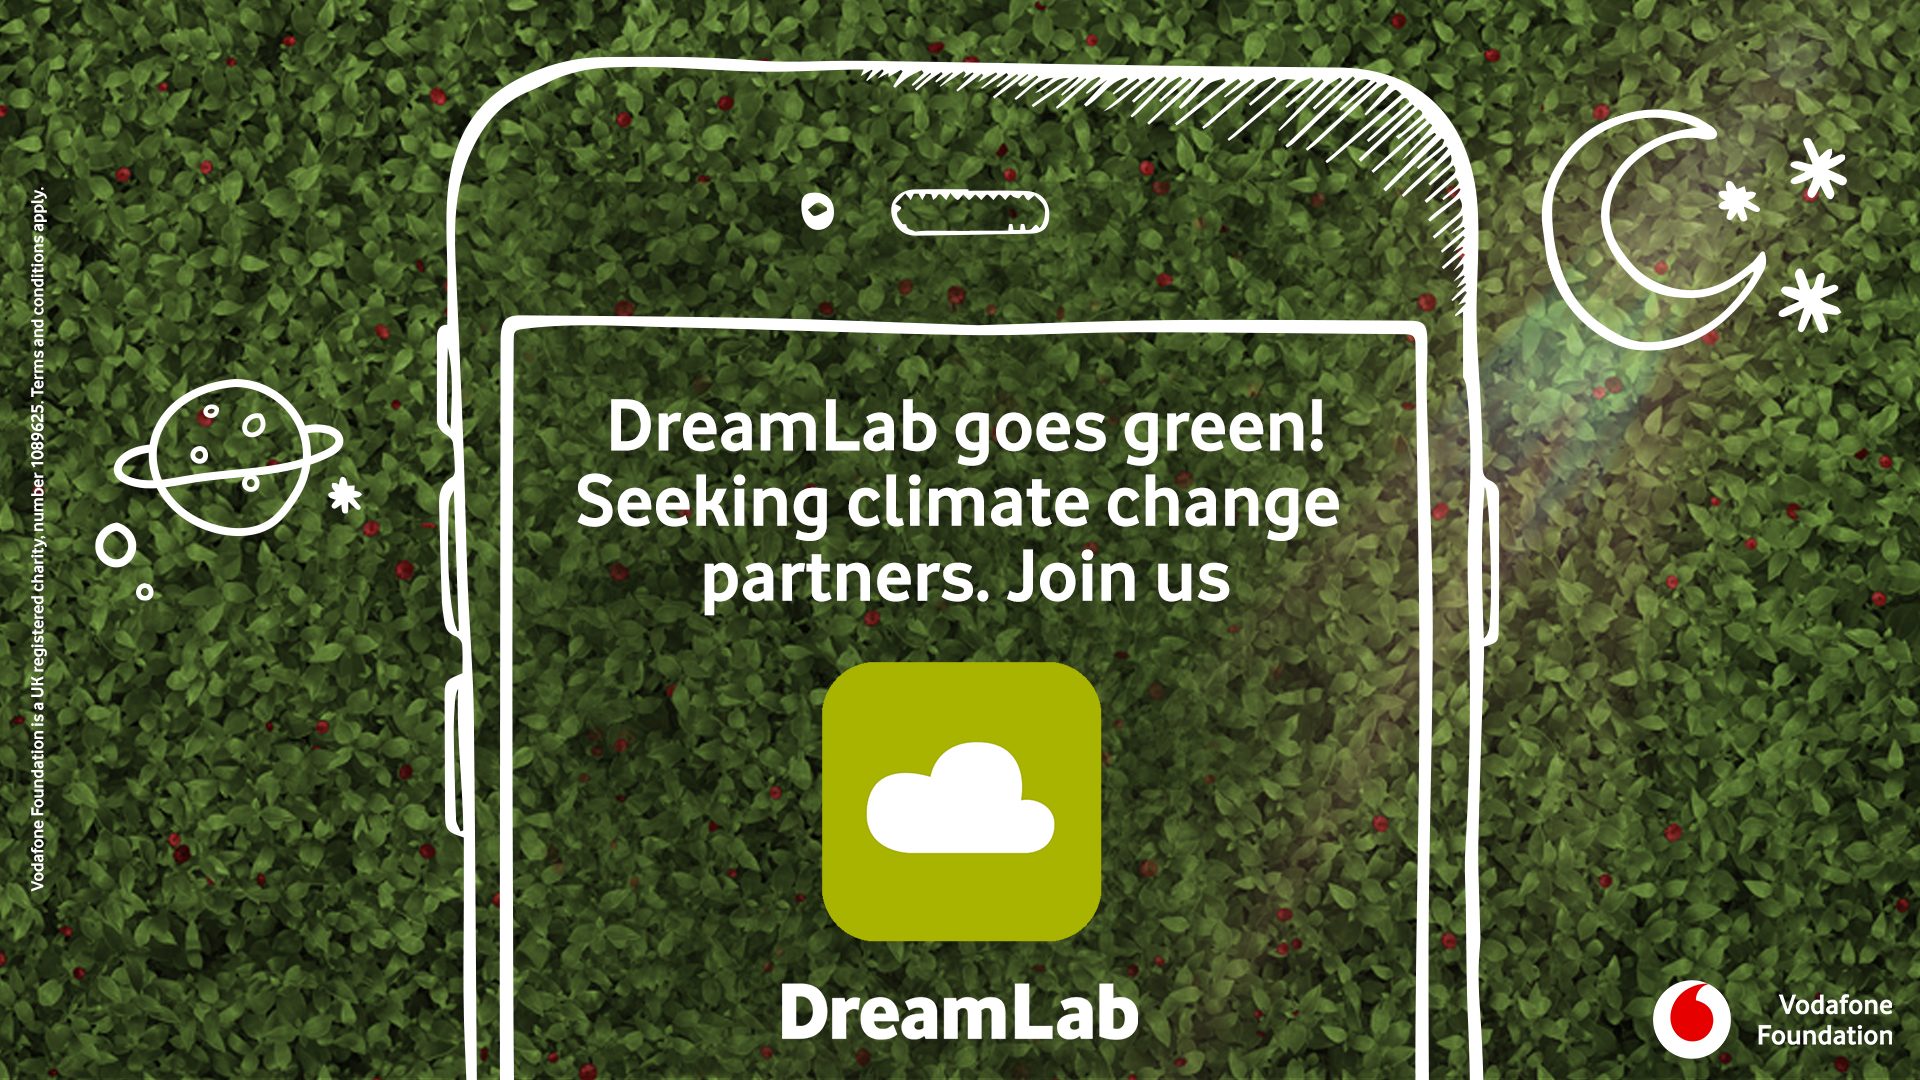 DreamLab goes green! Seeking climate change partners.